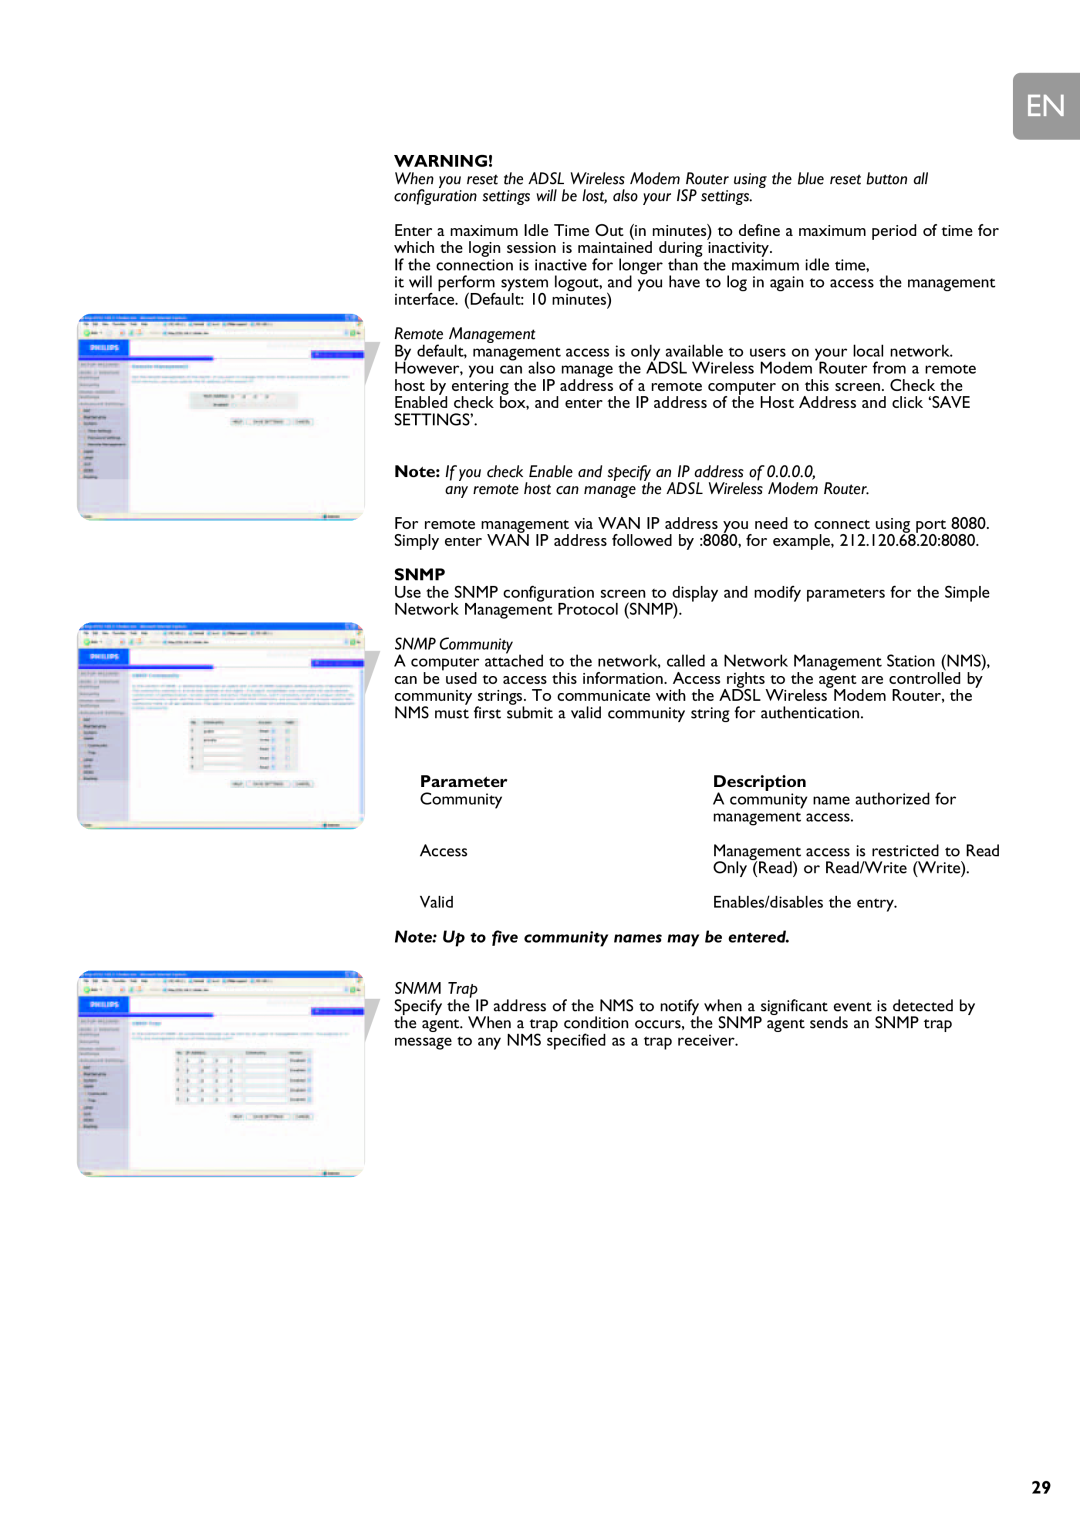 Philips SNA6640 user manual Remote Management, Snmp, SNMP Community, Parameter, Description, SNMM Trap 